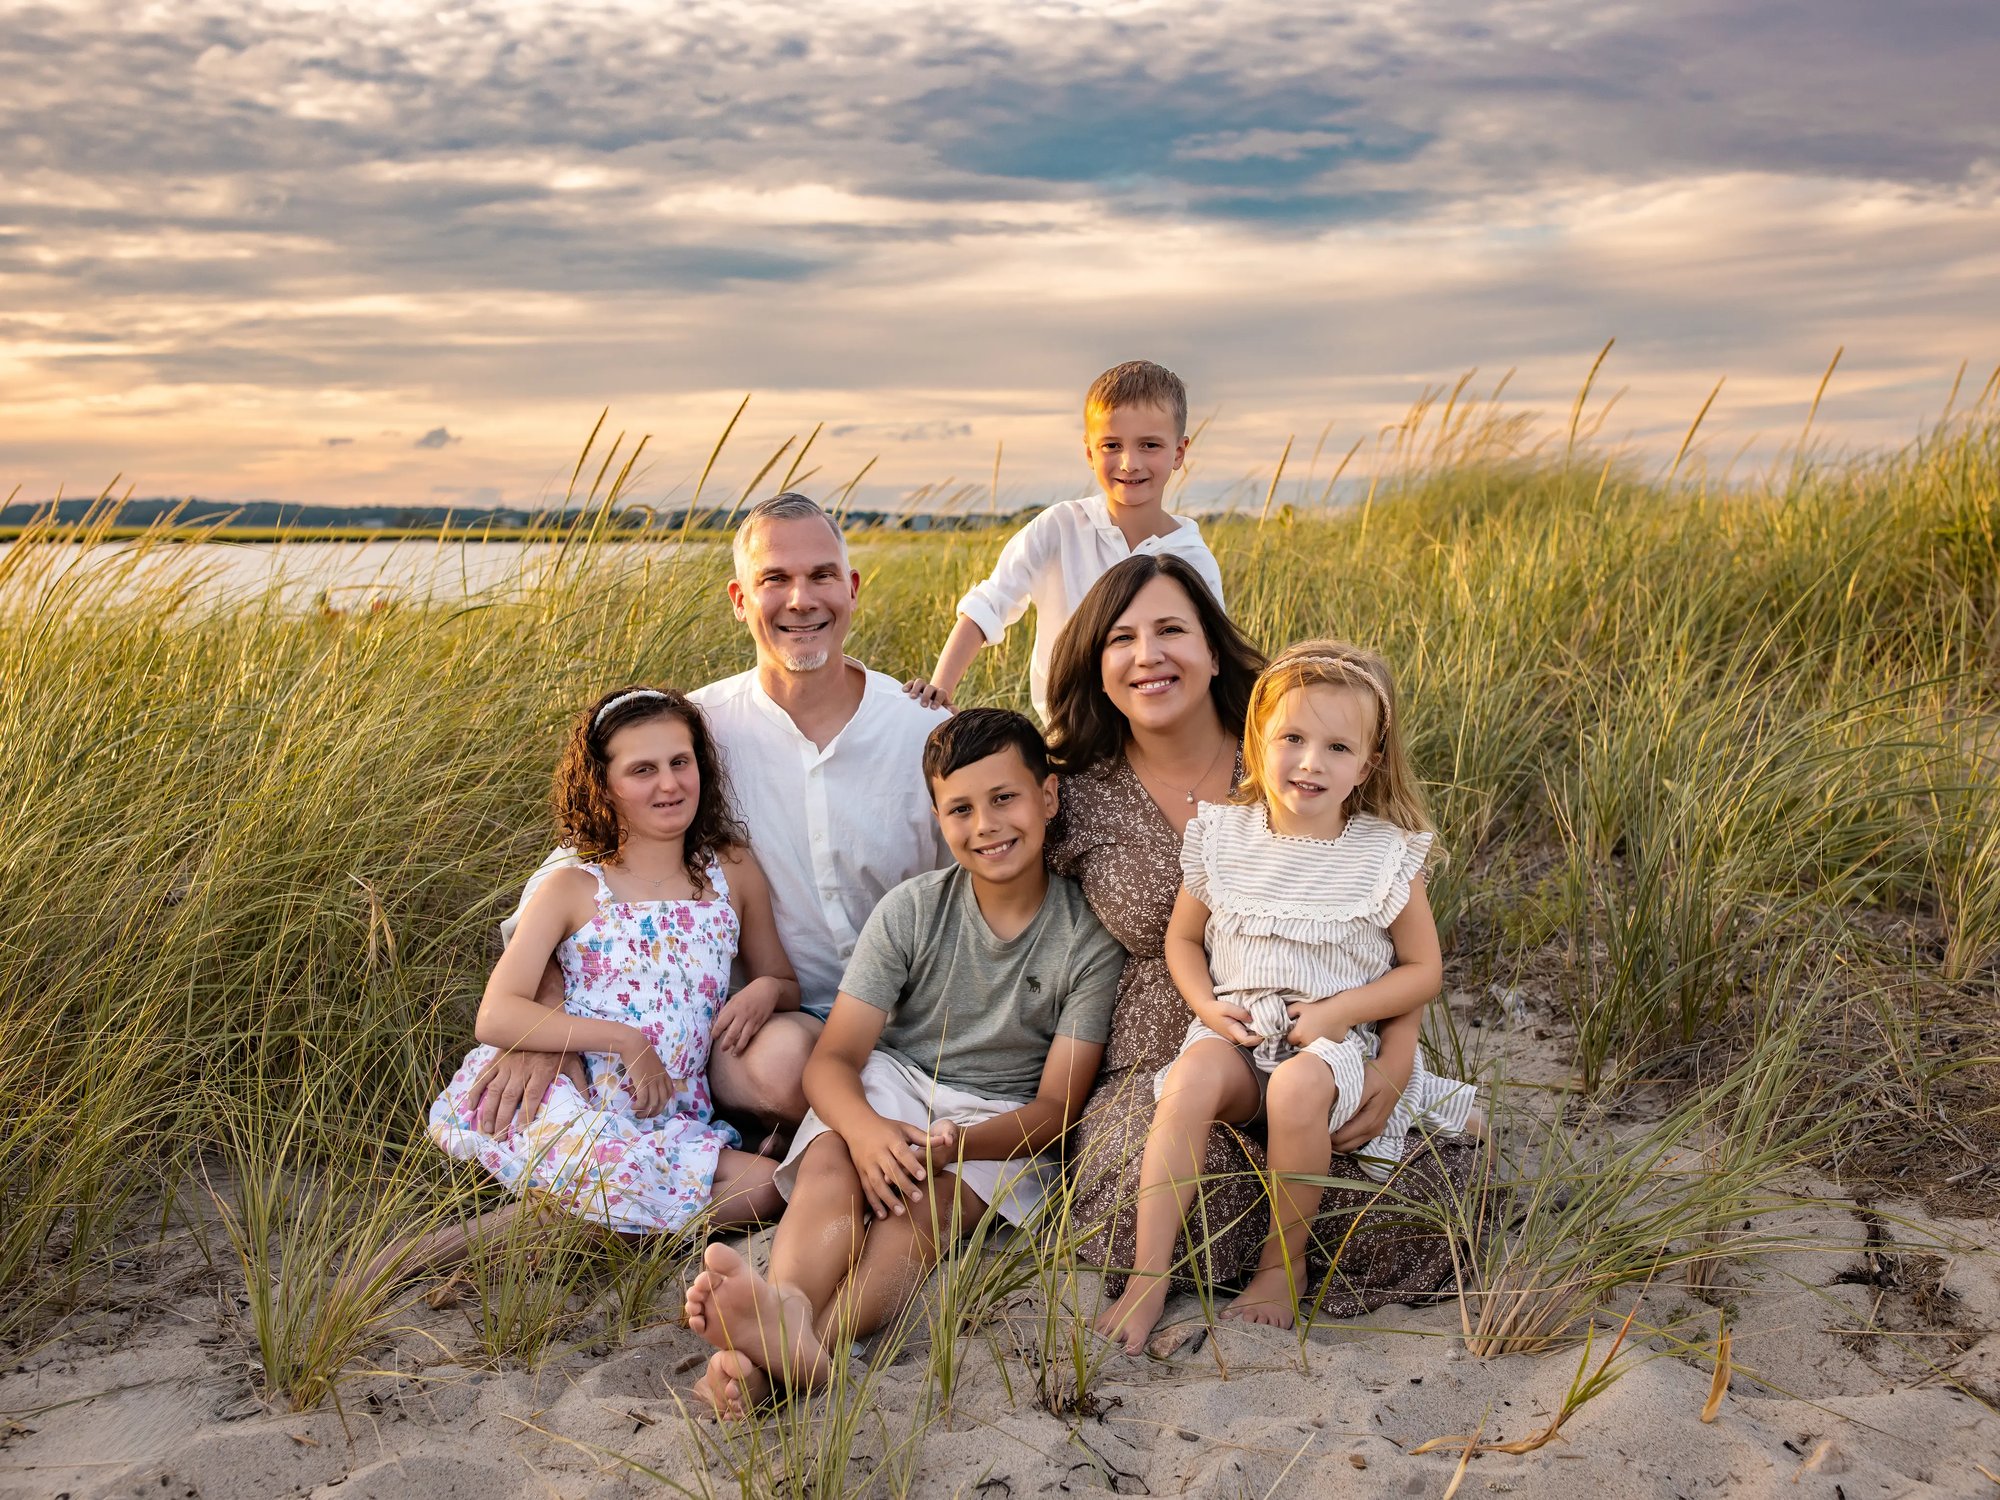 beach_family portrait - Boston photography